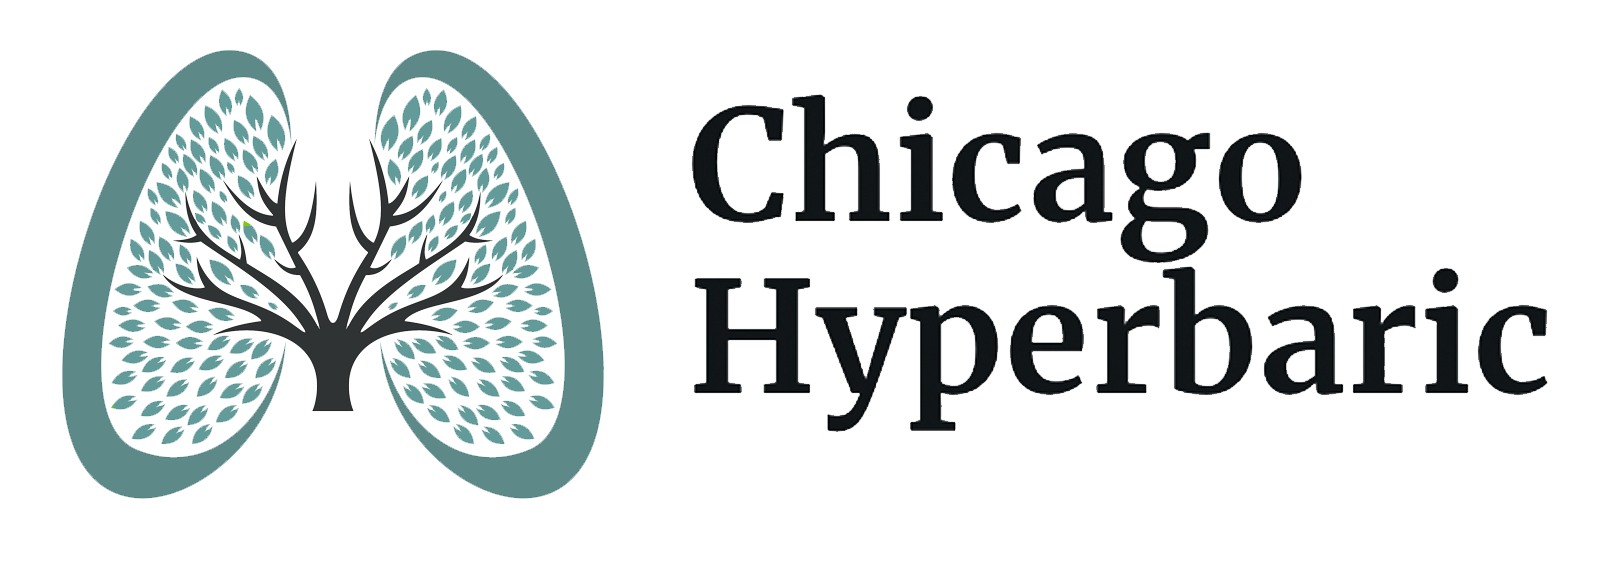 Chicago Hyperbaric Chamber